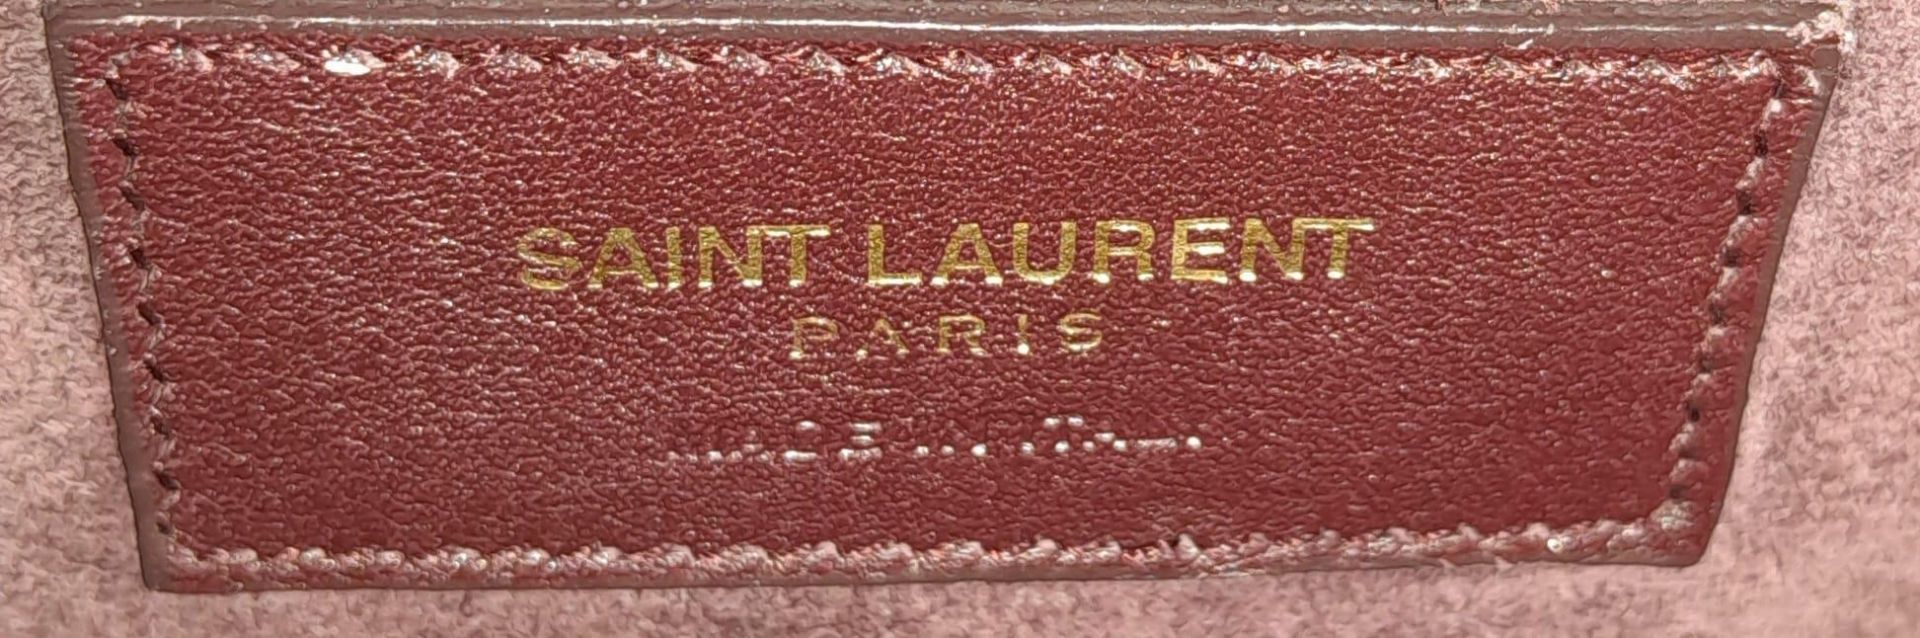 A Saint Laurent Sac De Jour Burgundy Handbag. Leather Exterior, Gold Tone Hardware, Double Handle in - Image 9 of 11